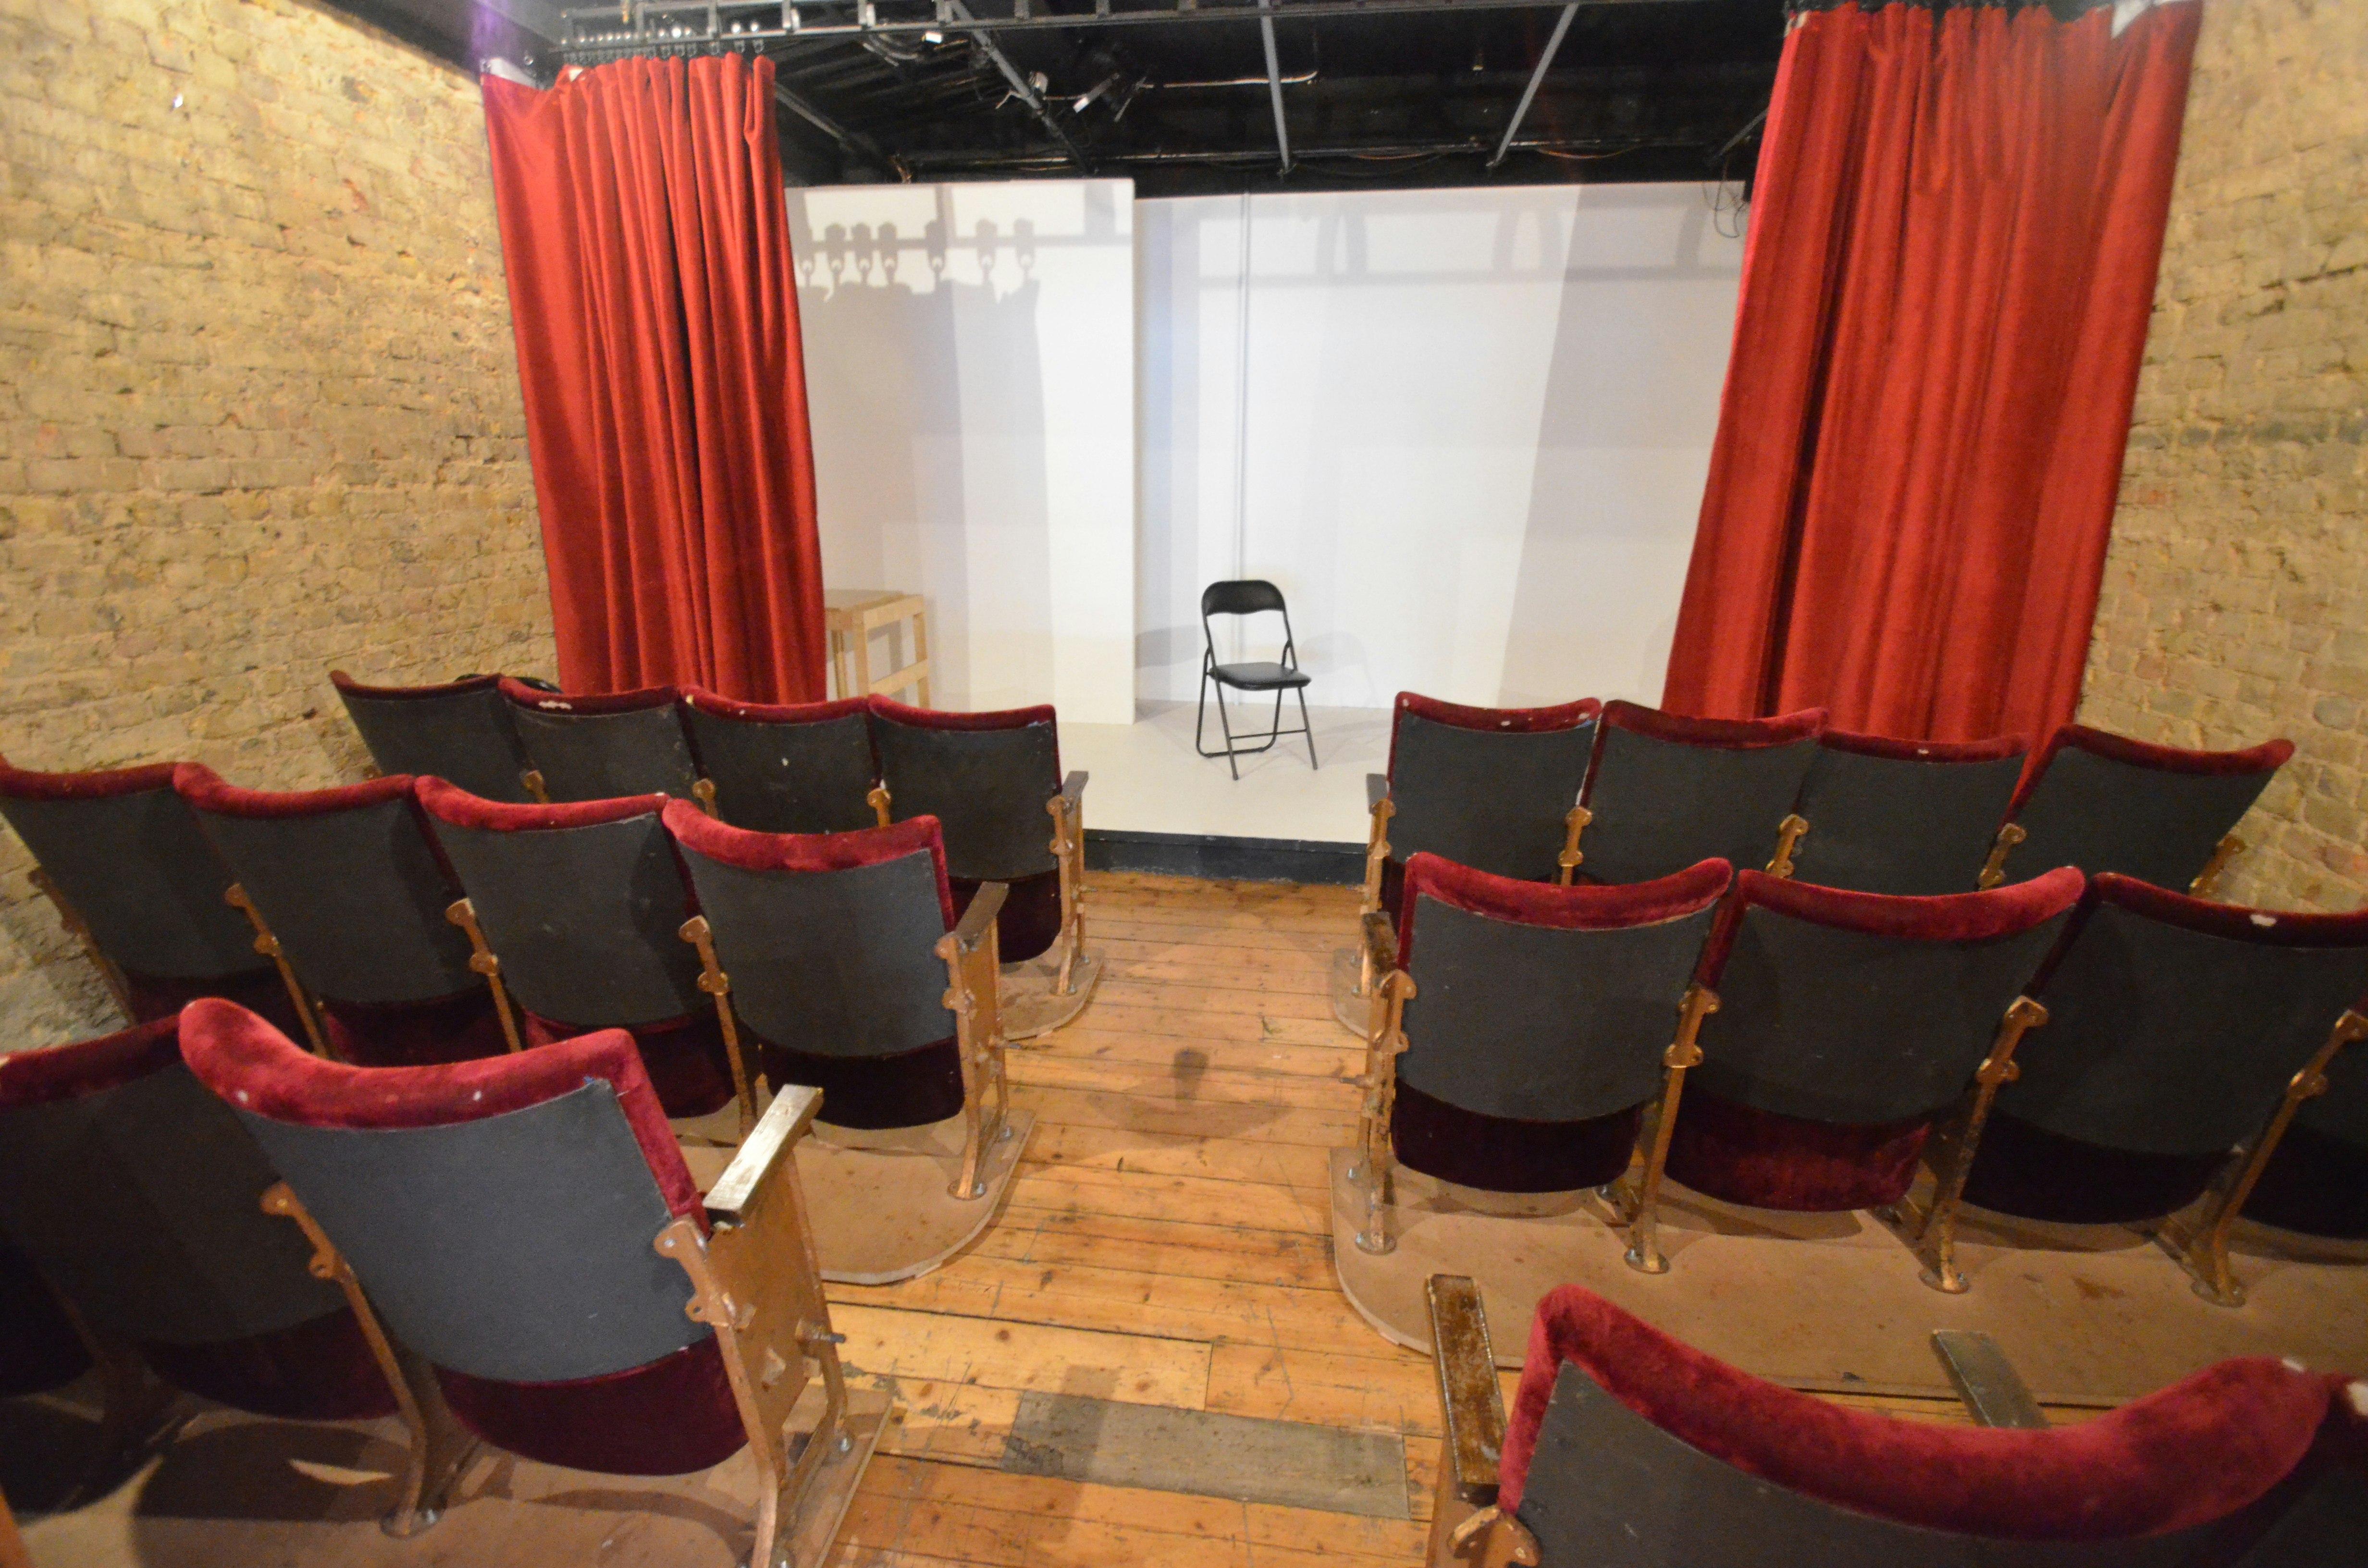 The Calder Theatre Bookshop - Theatre Space image 3